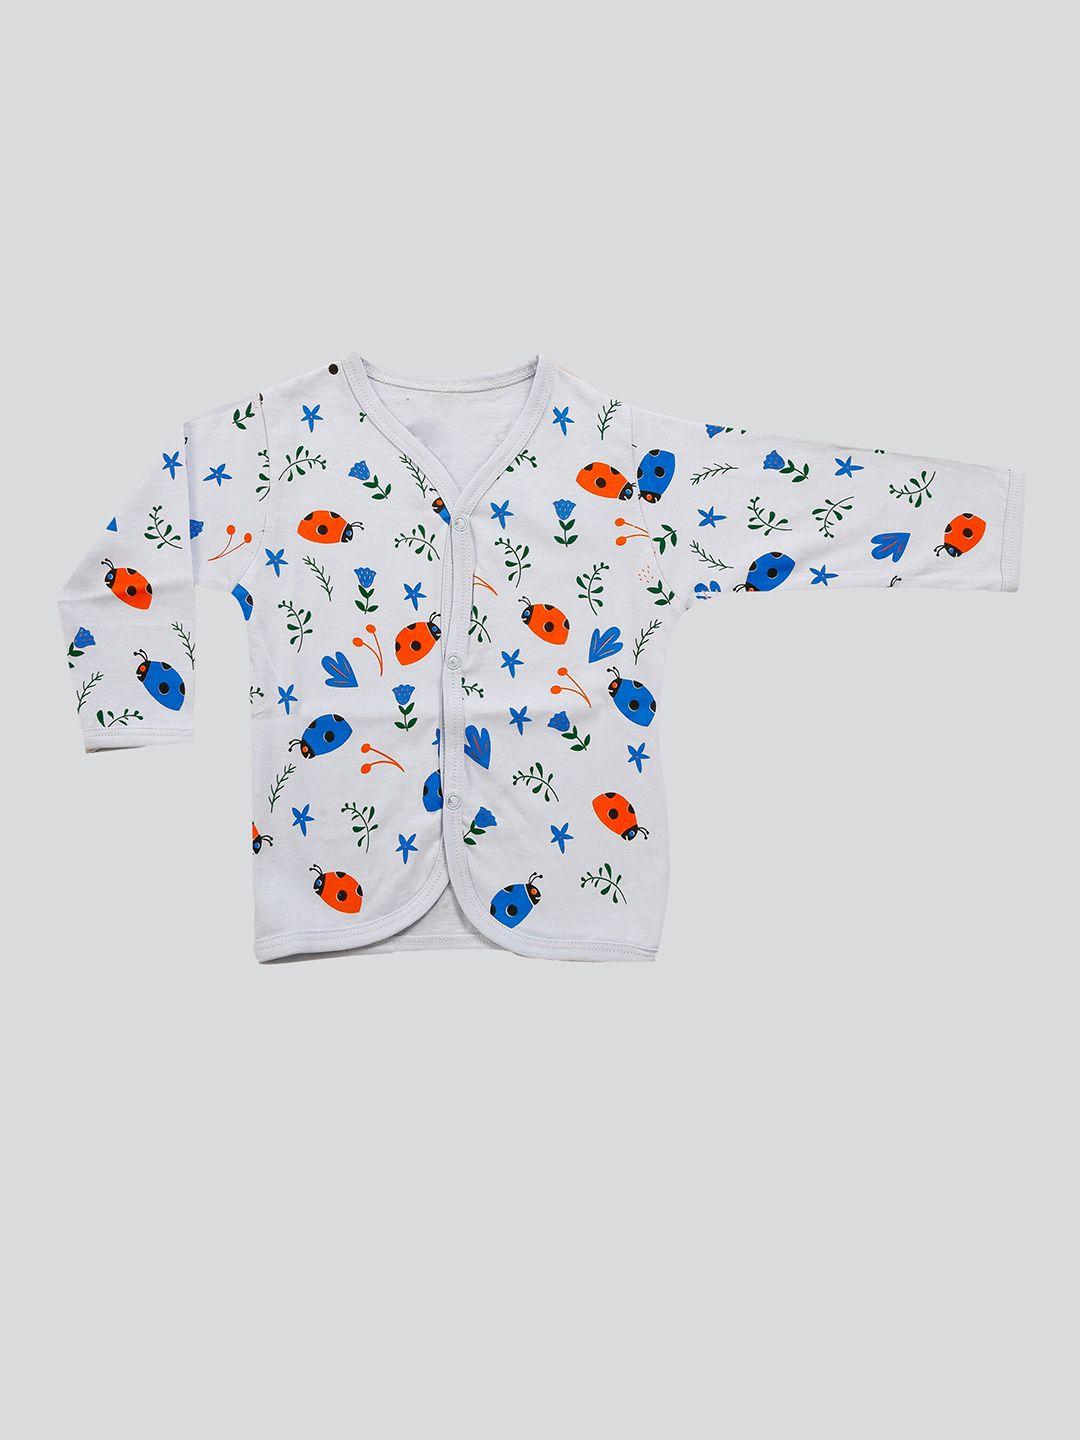 mojua kids floral printed v-neck cotton shirt